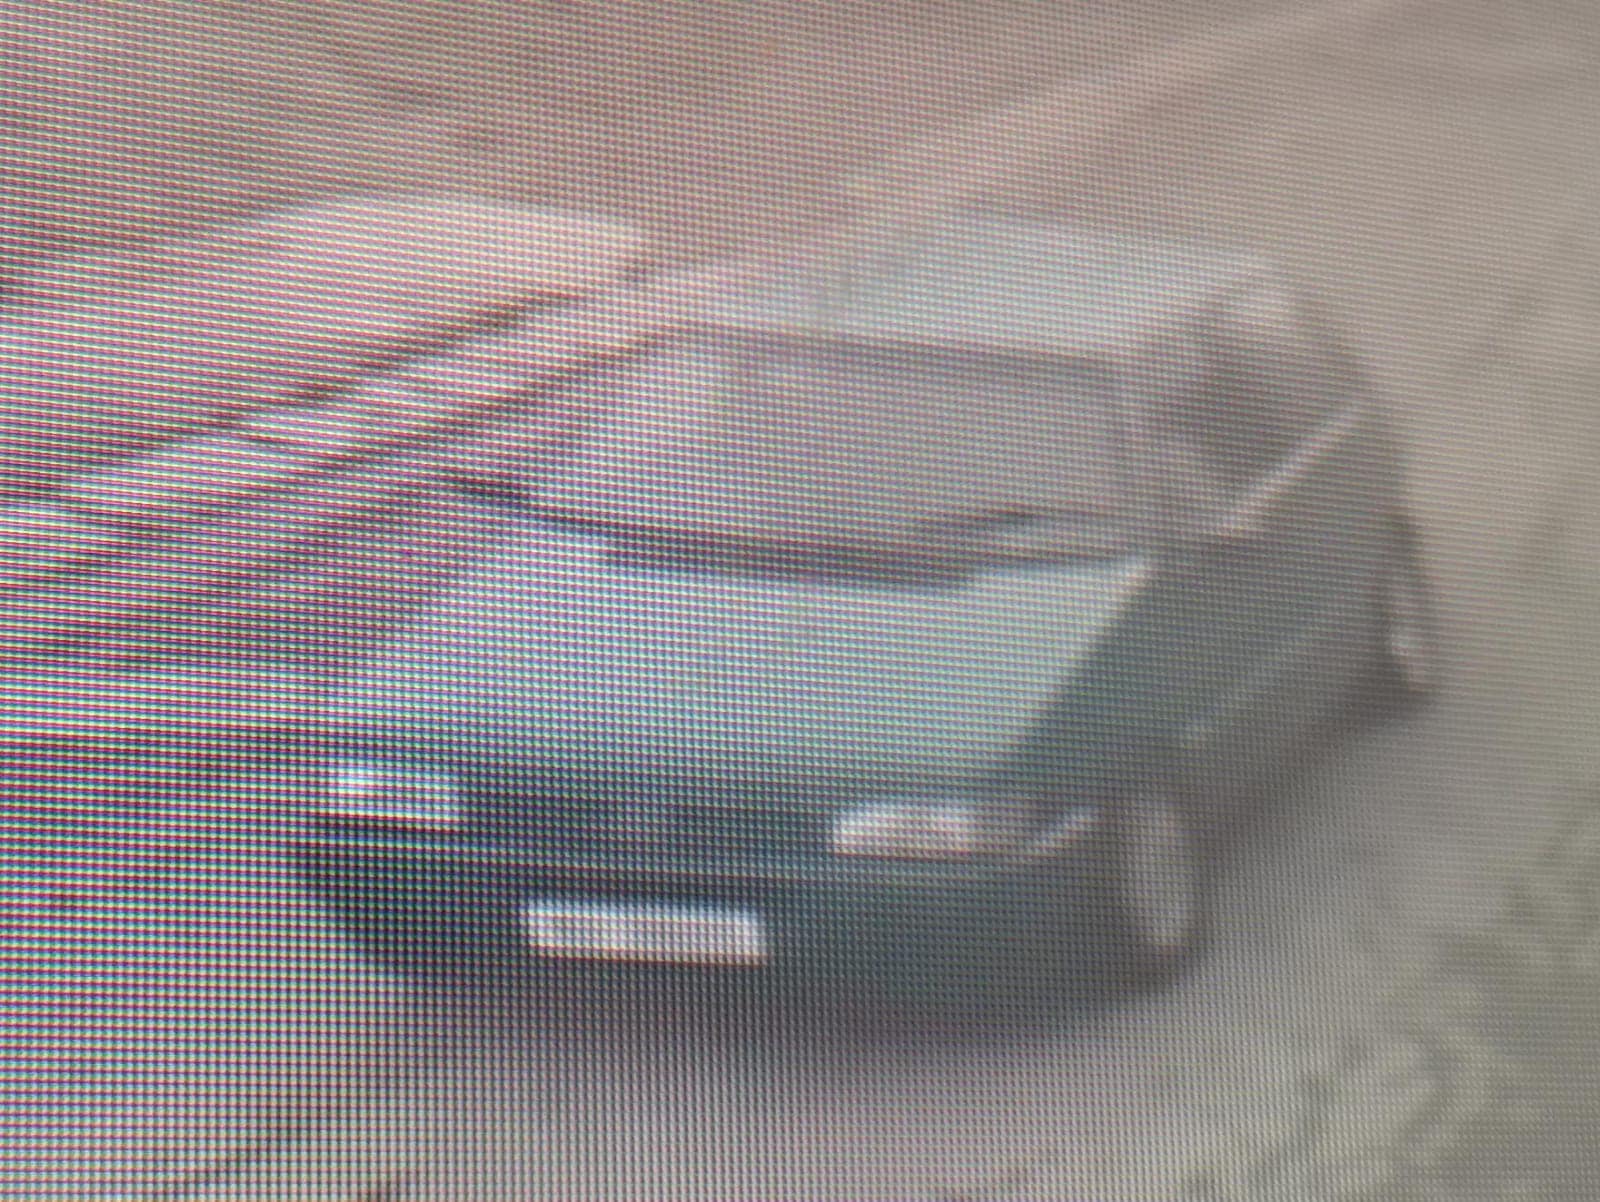 Theft of vehicle in Sanna Township